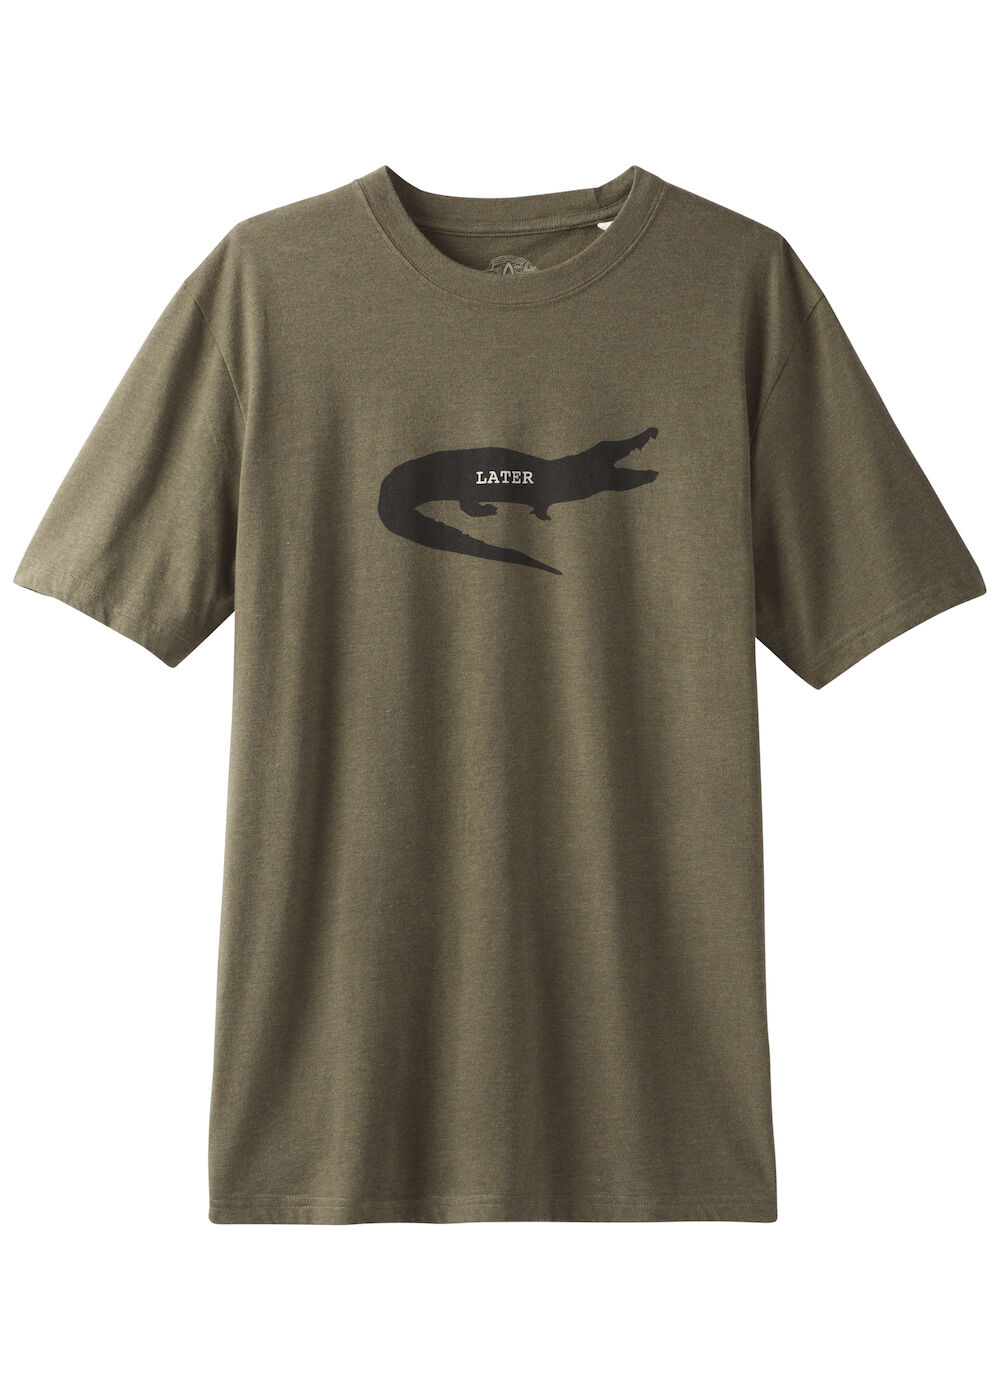 Prana Later Gator Journeyman - T-Shirt - Herren